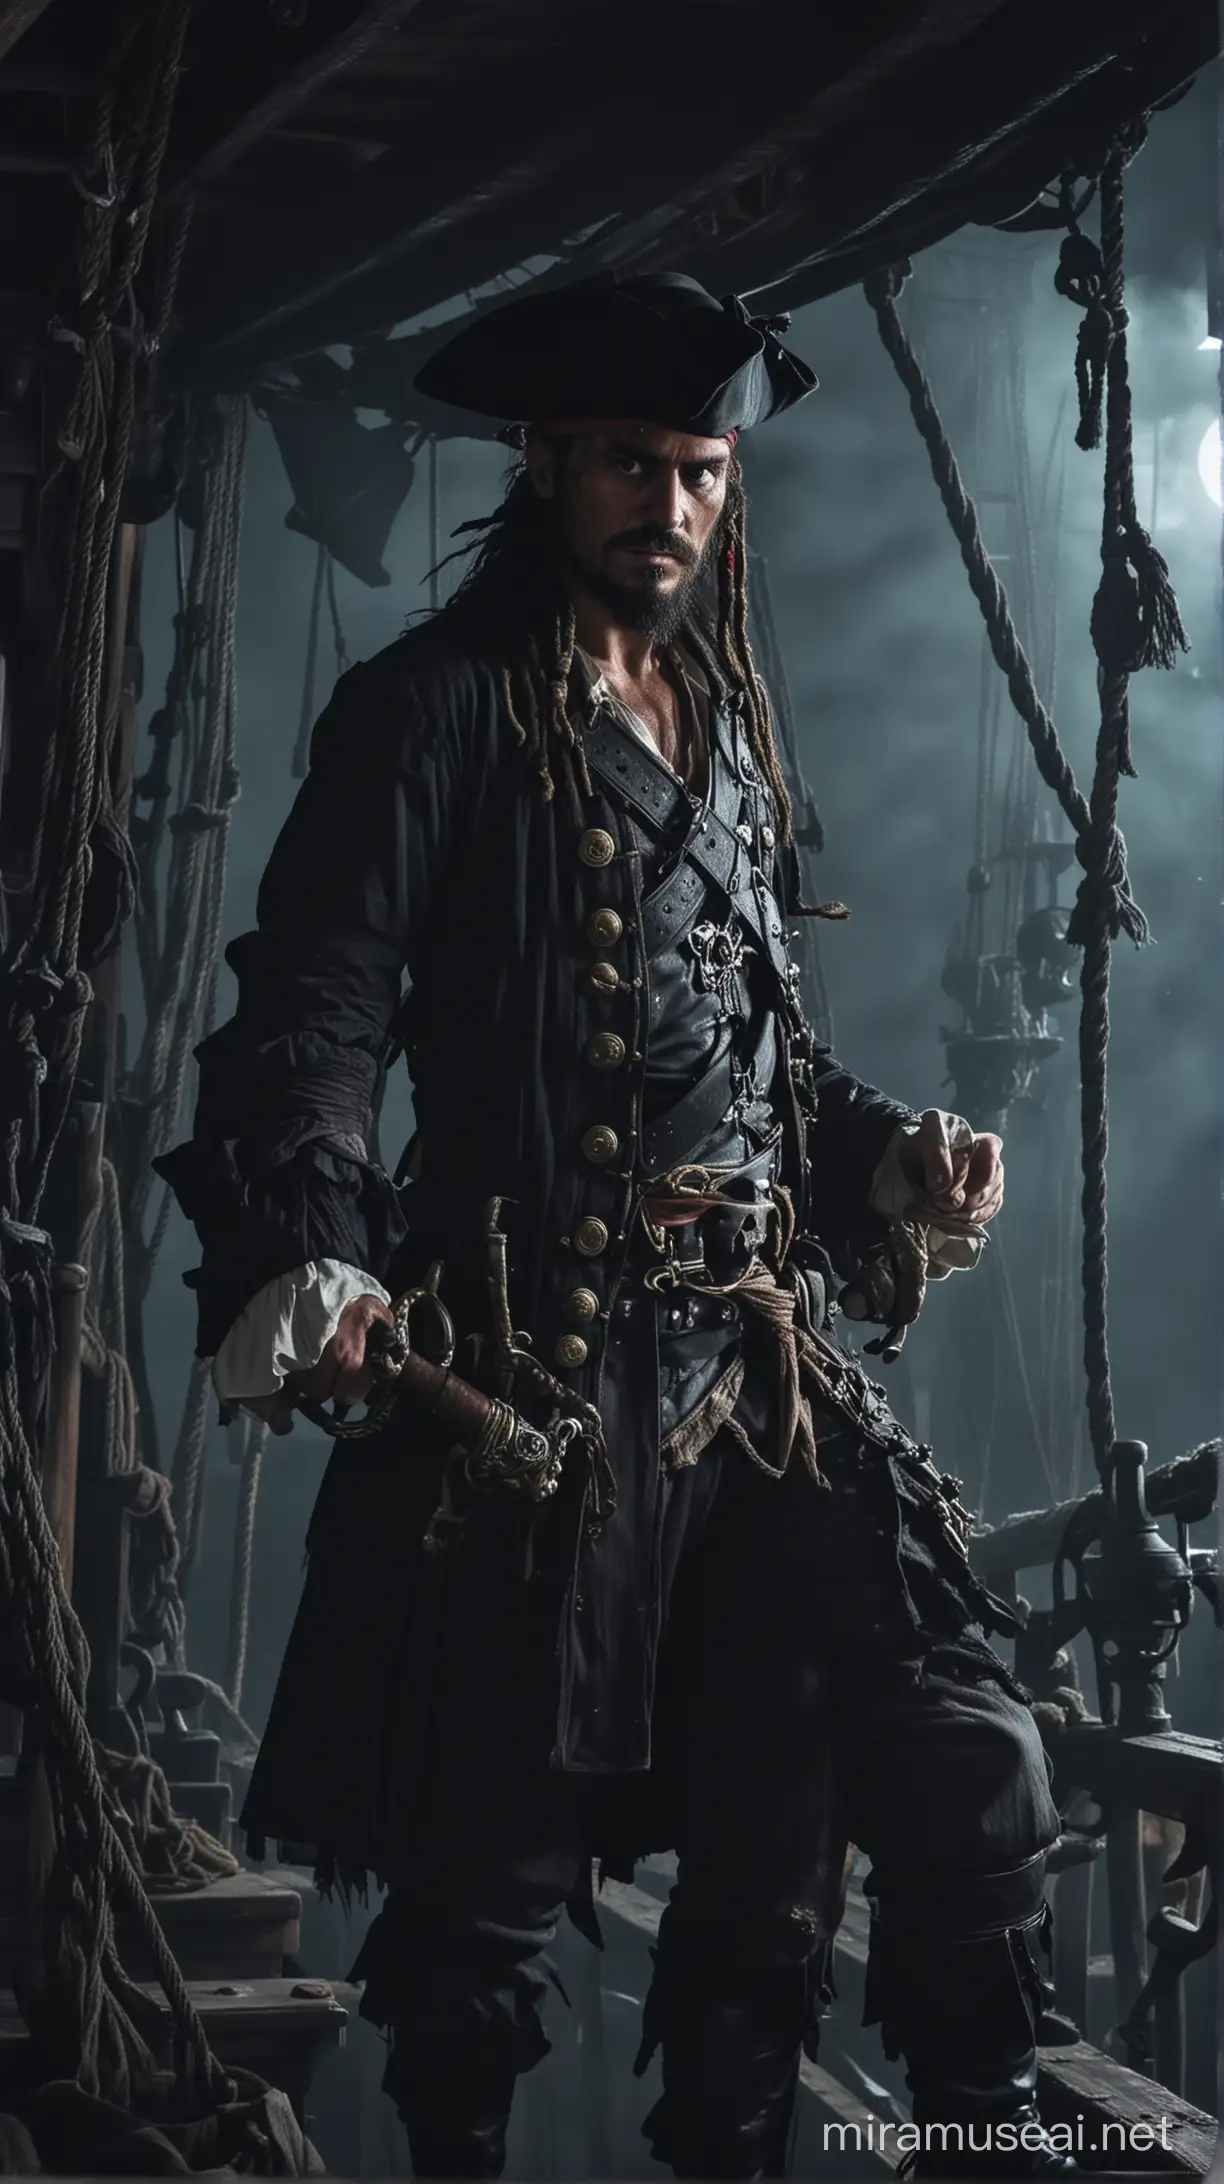 Pirate Standing on Dark Lower Deck of Ship